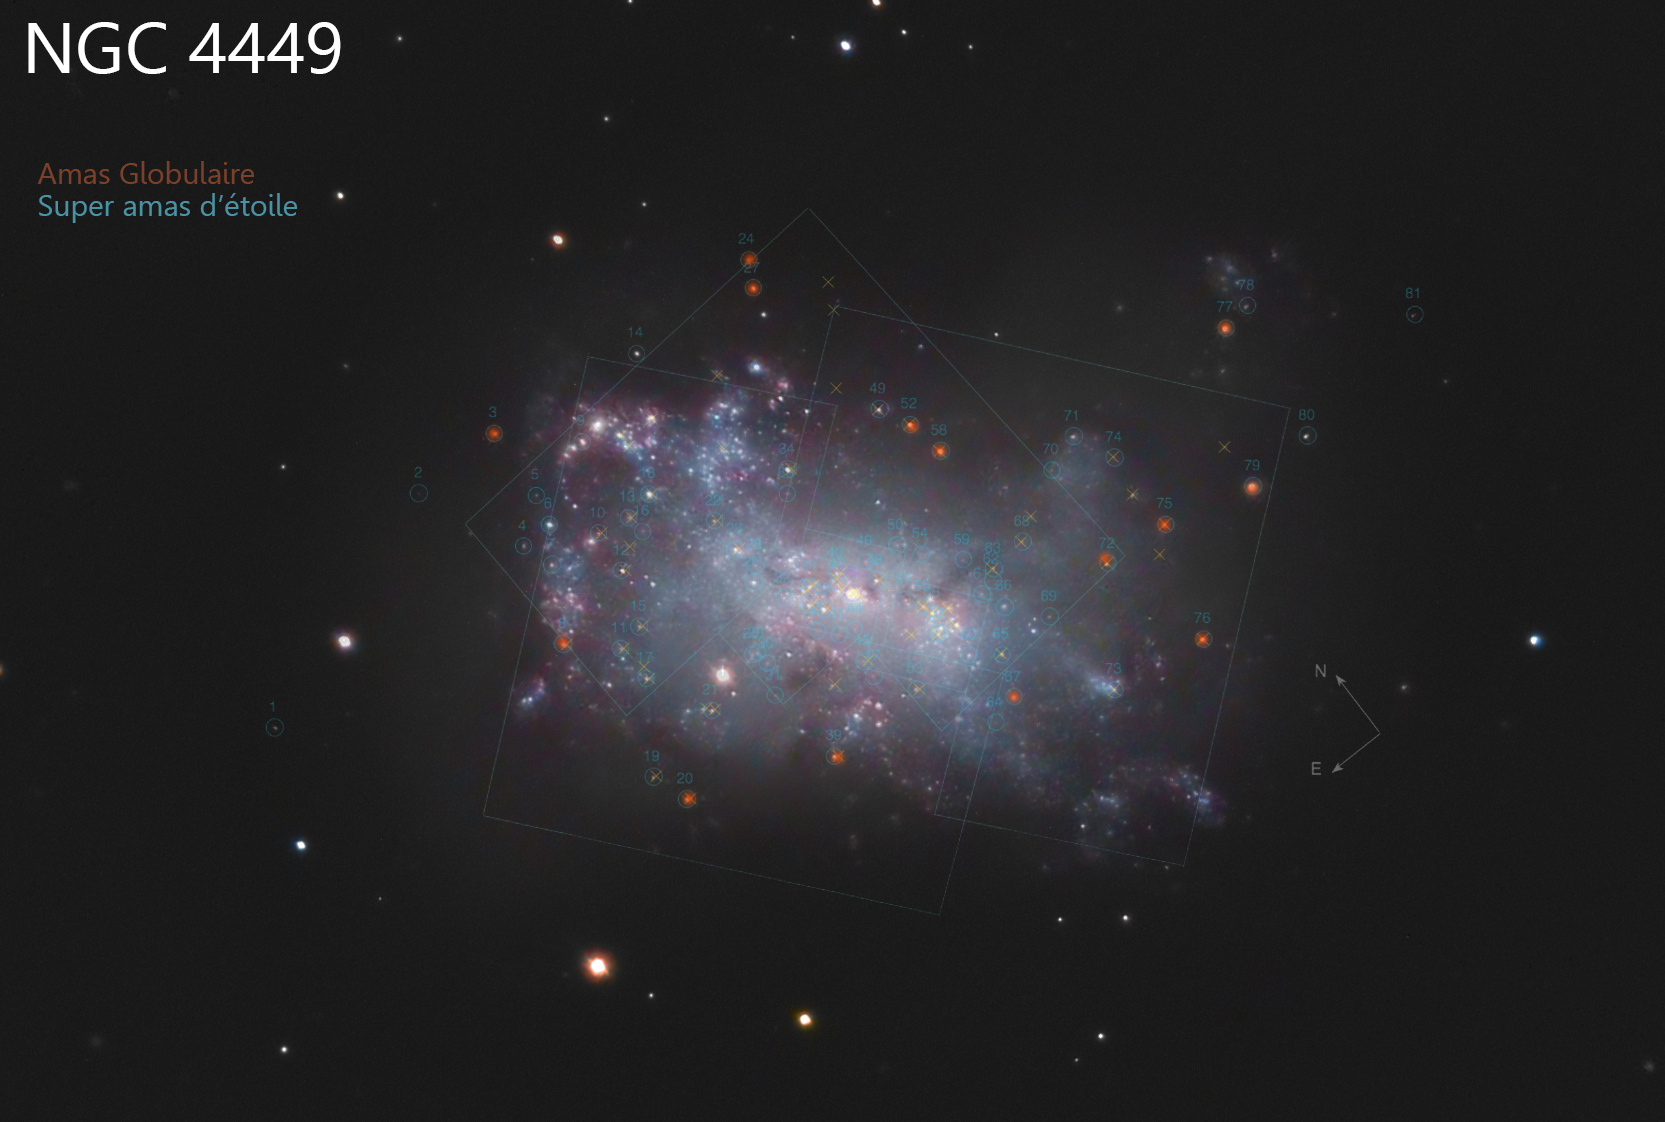 624bda0c9d6d0_NGC4449bien2022annotationcrop.jpg.22a59cf244cf73c1072a36eb8d92402c.jpg